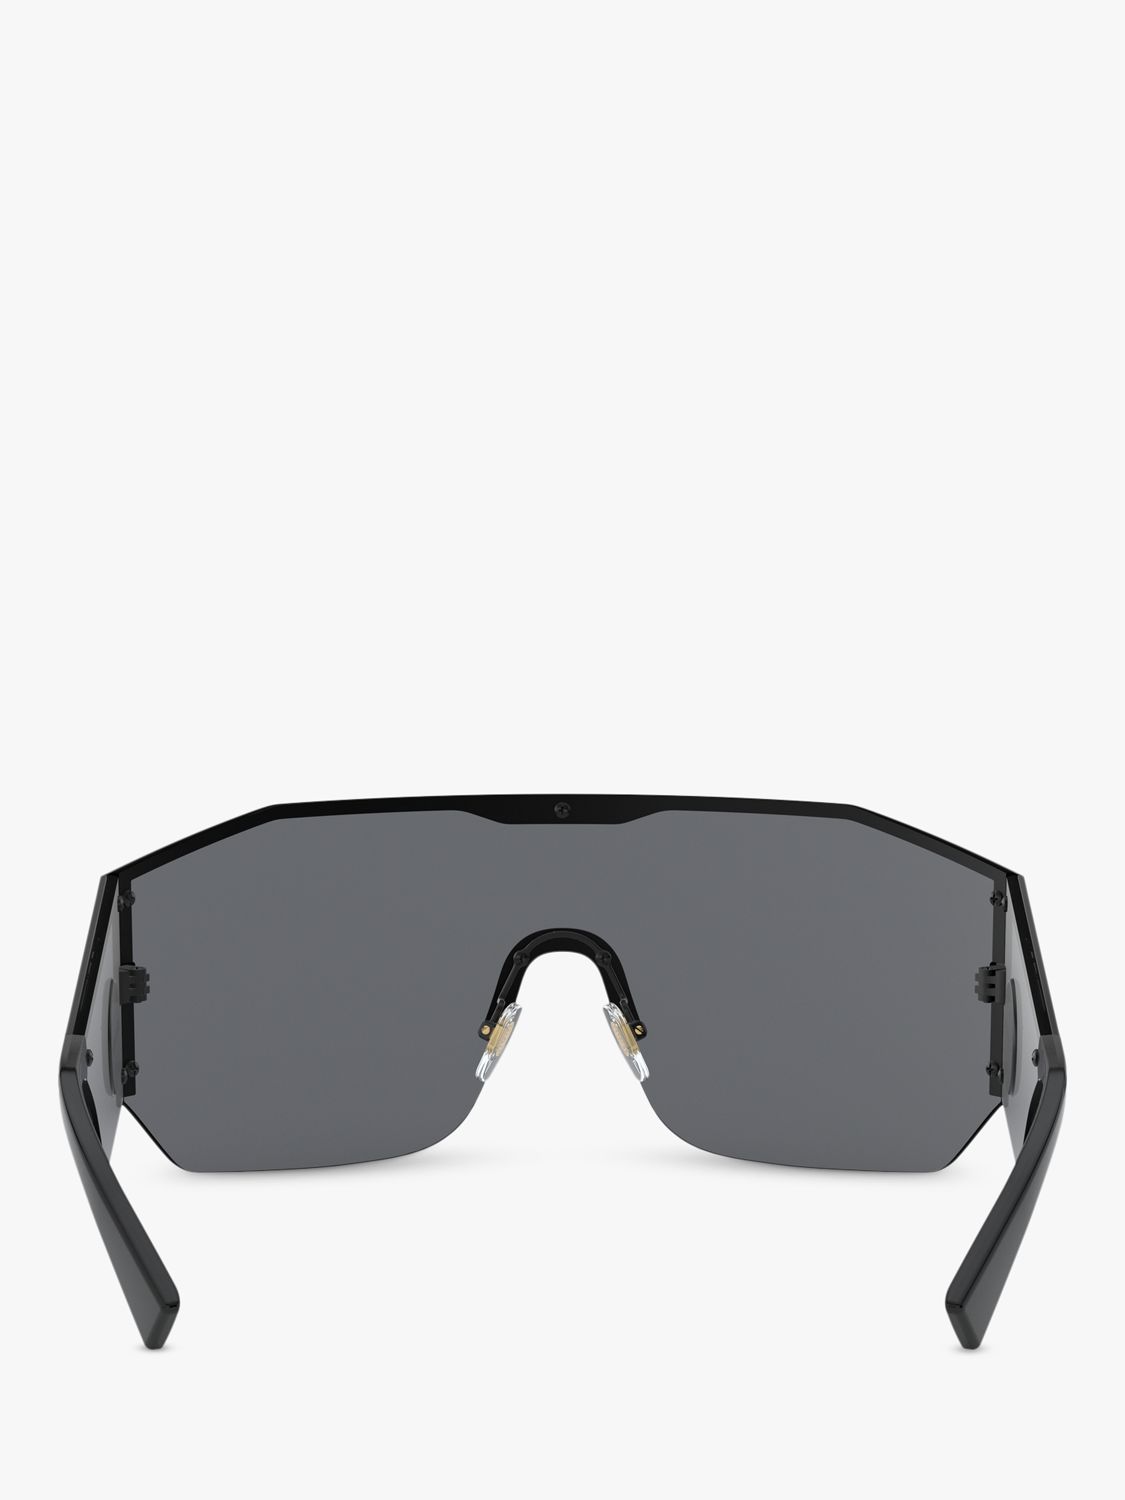 Versace VE2220 Men's Irregular Sunglasses, Black/Grey at John Lewis ...